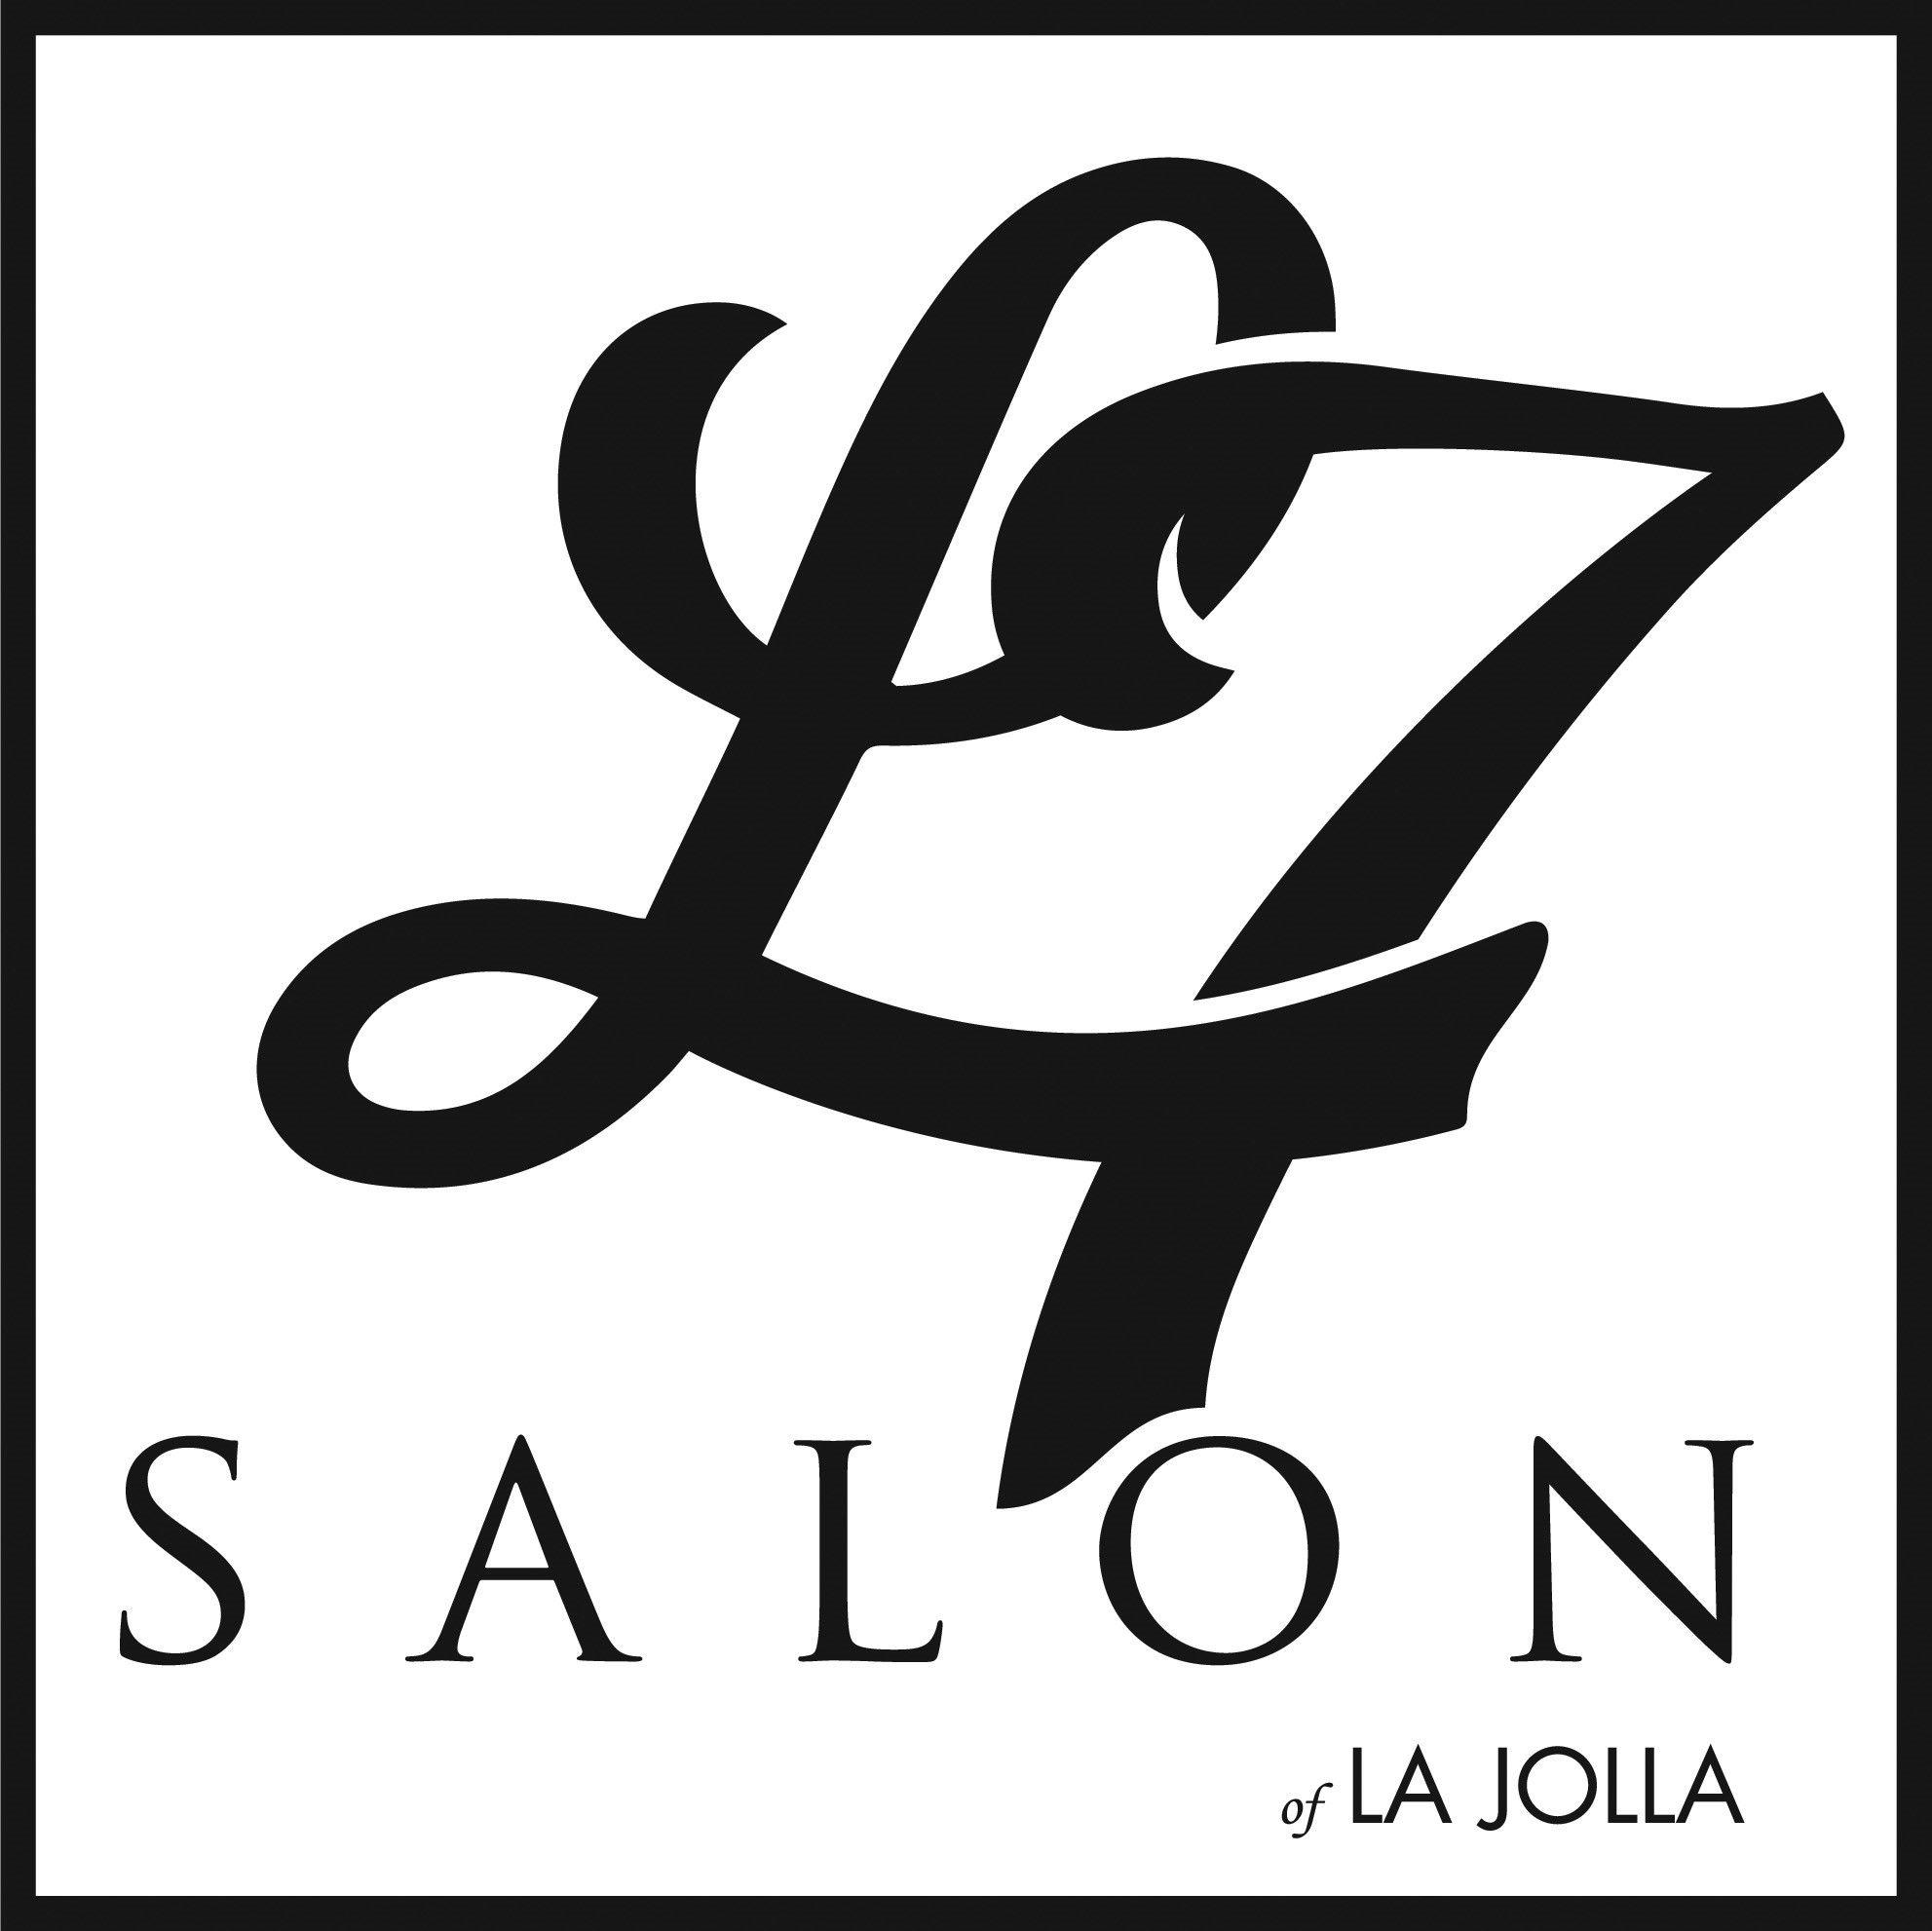 L7 Logo - L7 LOGO 02 - L7 Salon La Jolla